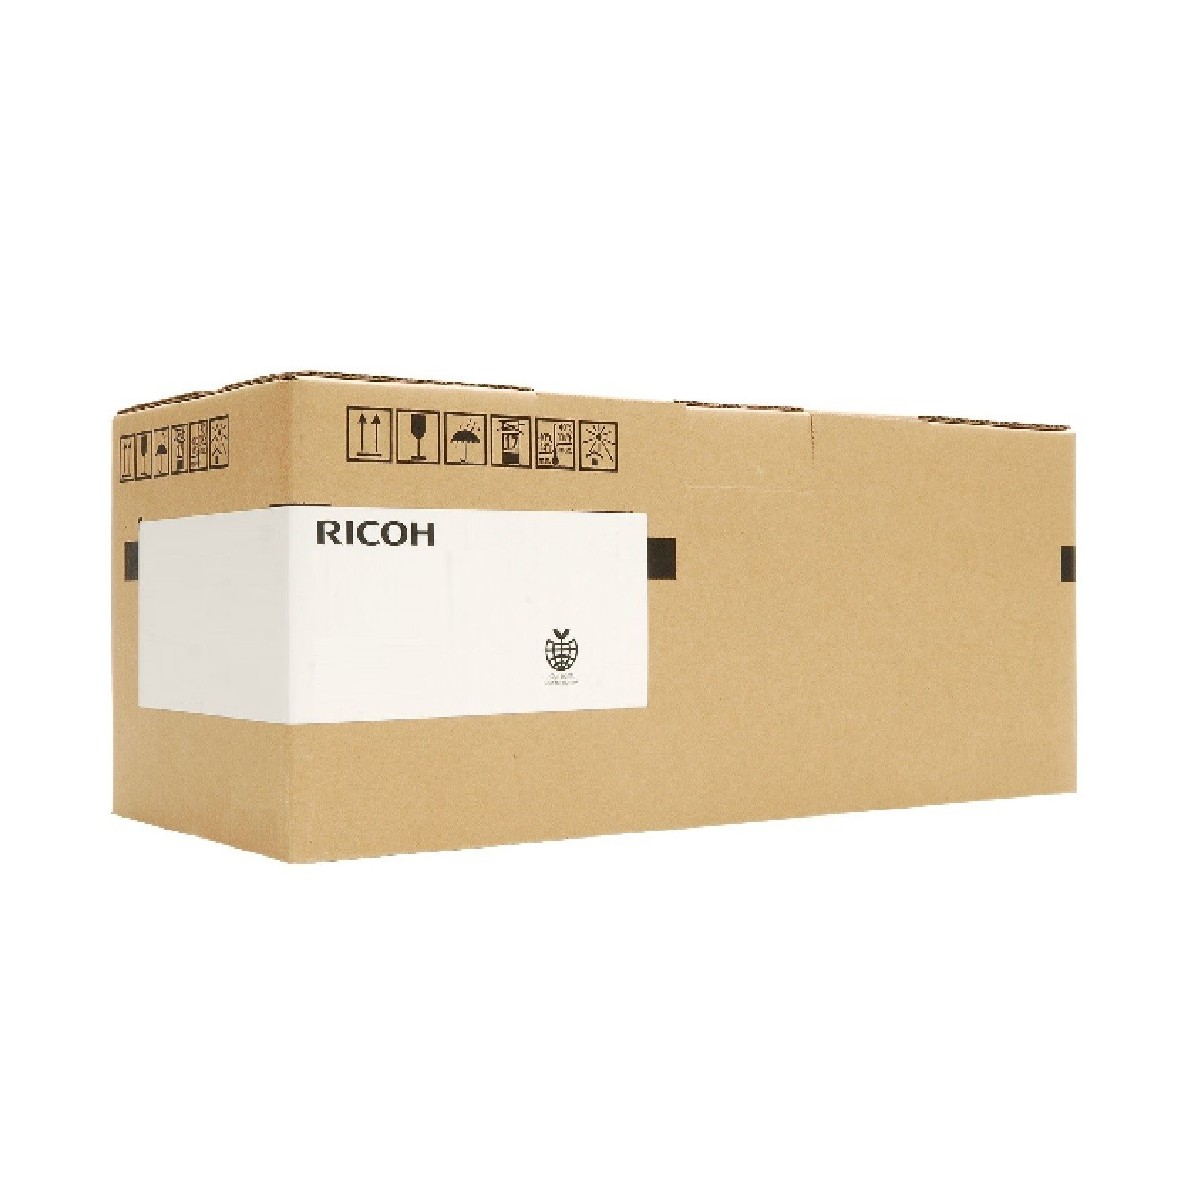 Ricoh D2970121 - Original - Ricoh - MPC306 MPC307 - 1 pc(s) - Black - 500 g